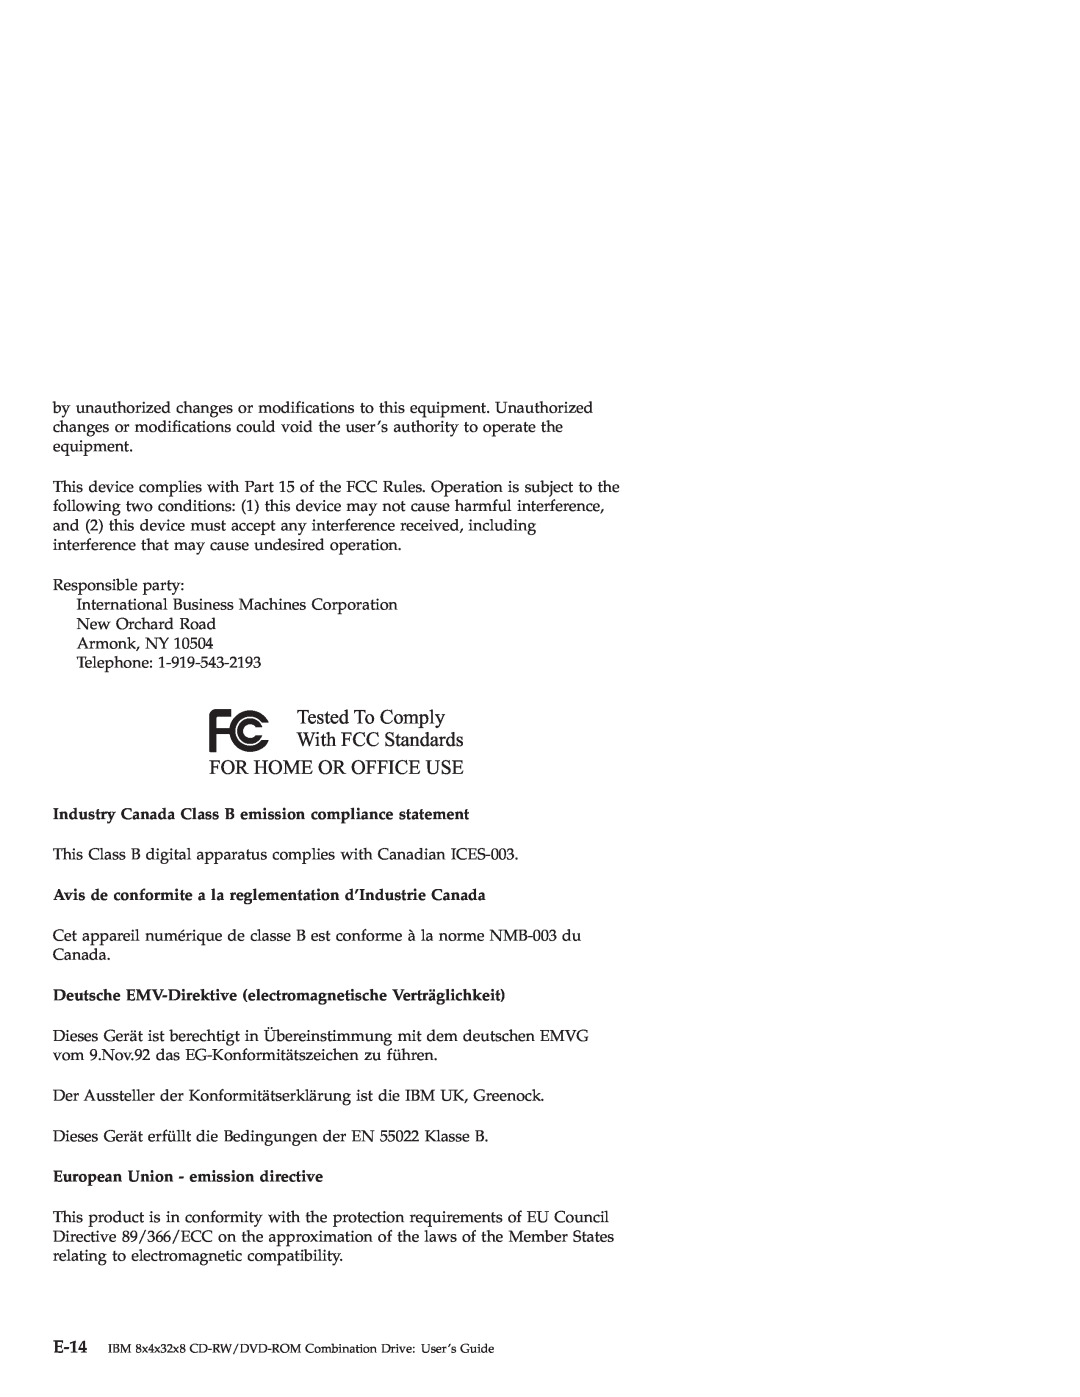 IBM 22P6959 manual Industry Canada Class B emission compliance statement, European Union - emission directive 